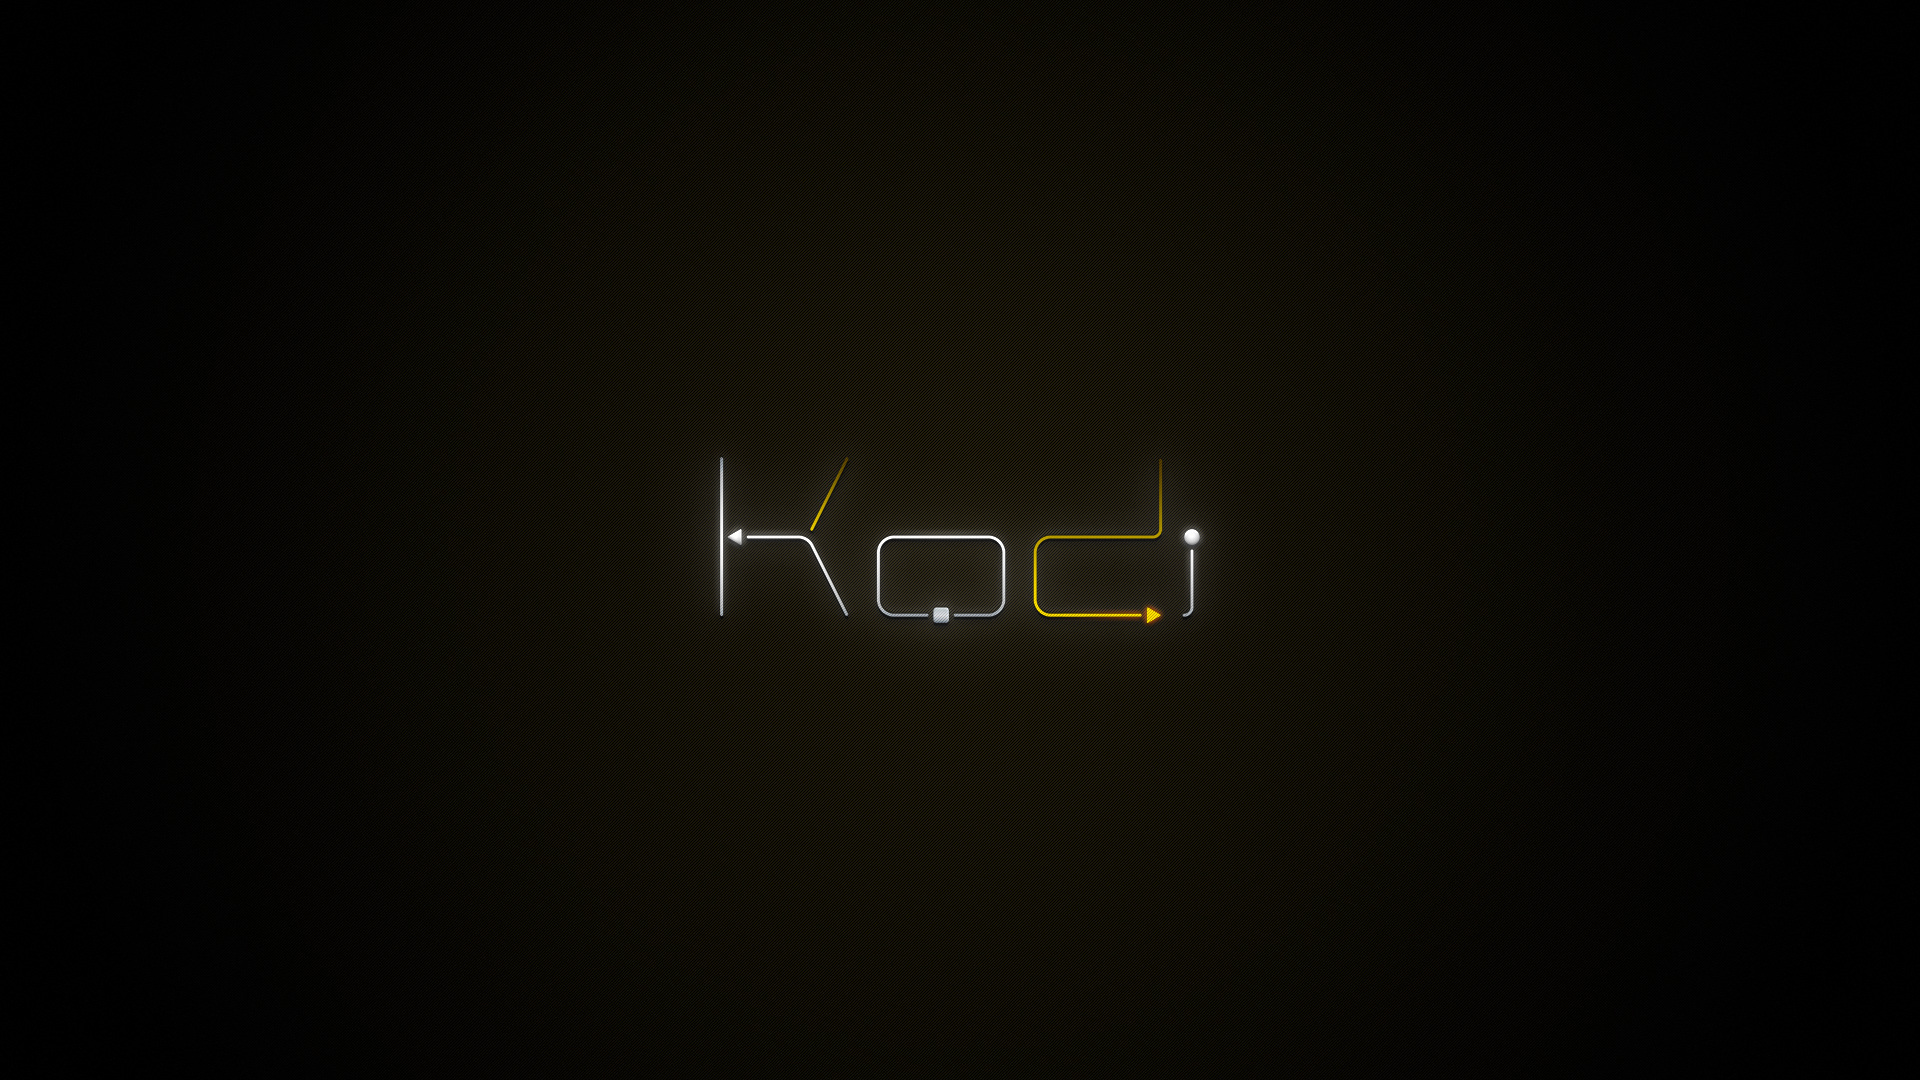 File:Kodi-Wallpaper-1-1080p samfisher.jpg